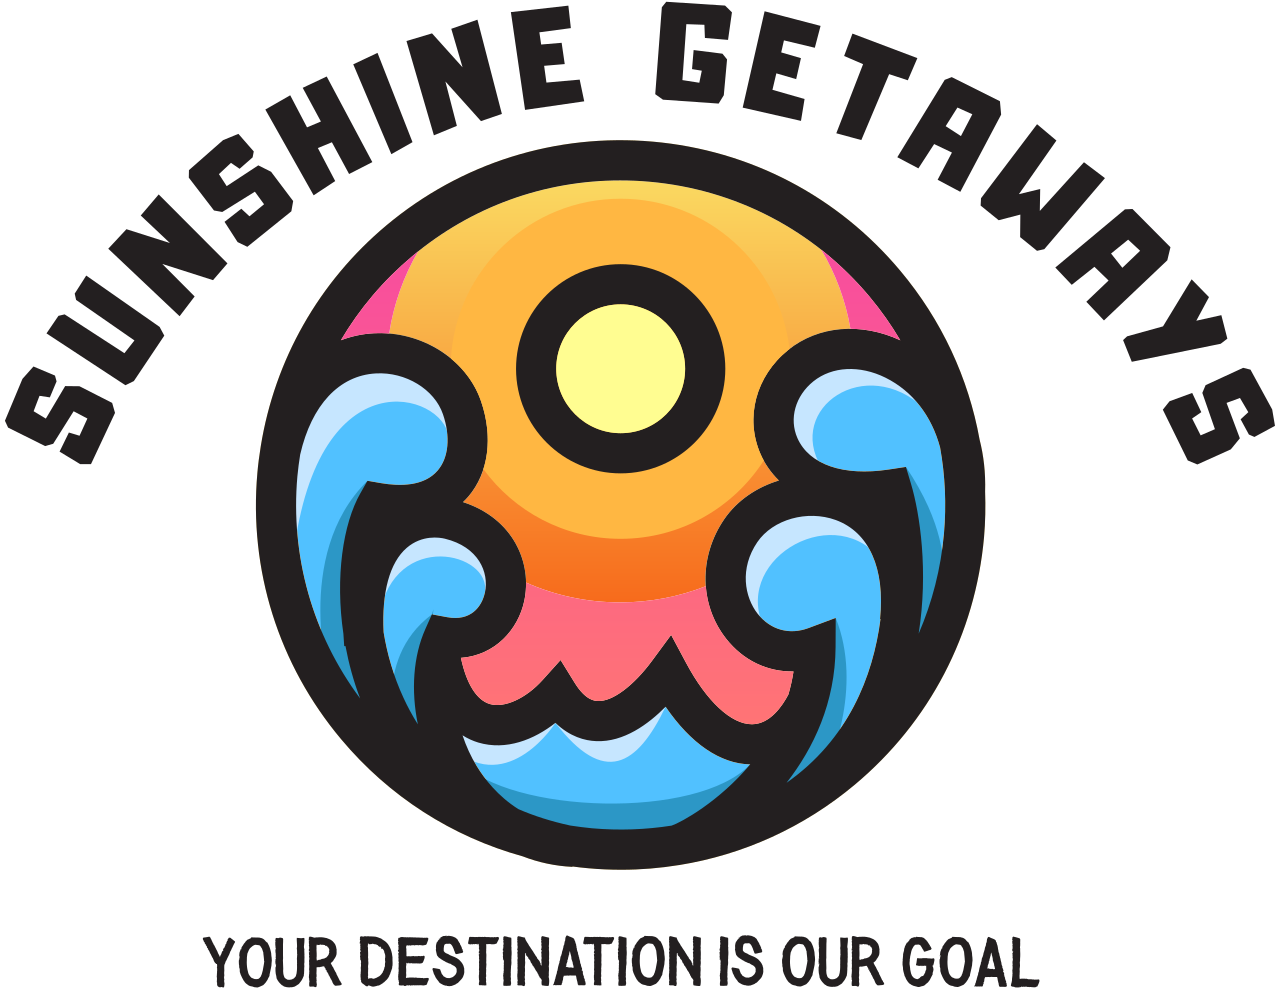 SUNSHINE GETAWAYS's logo